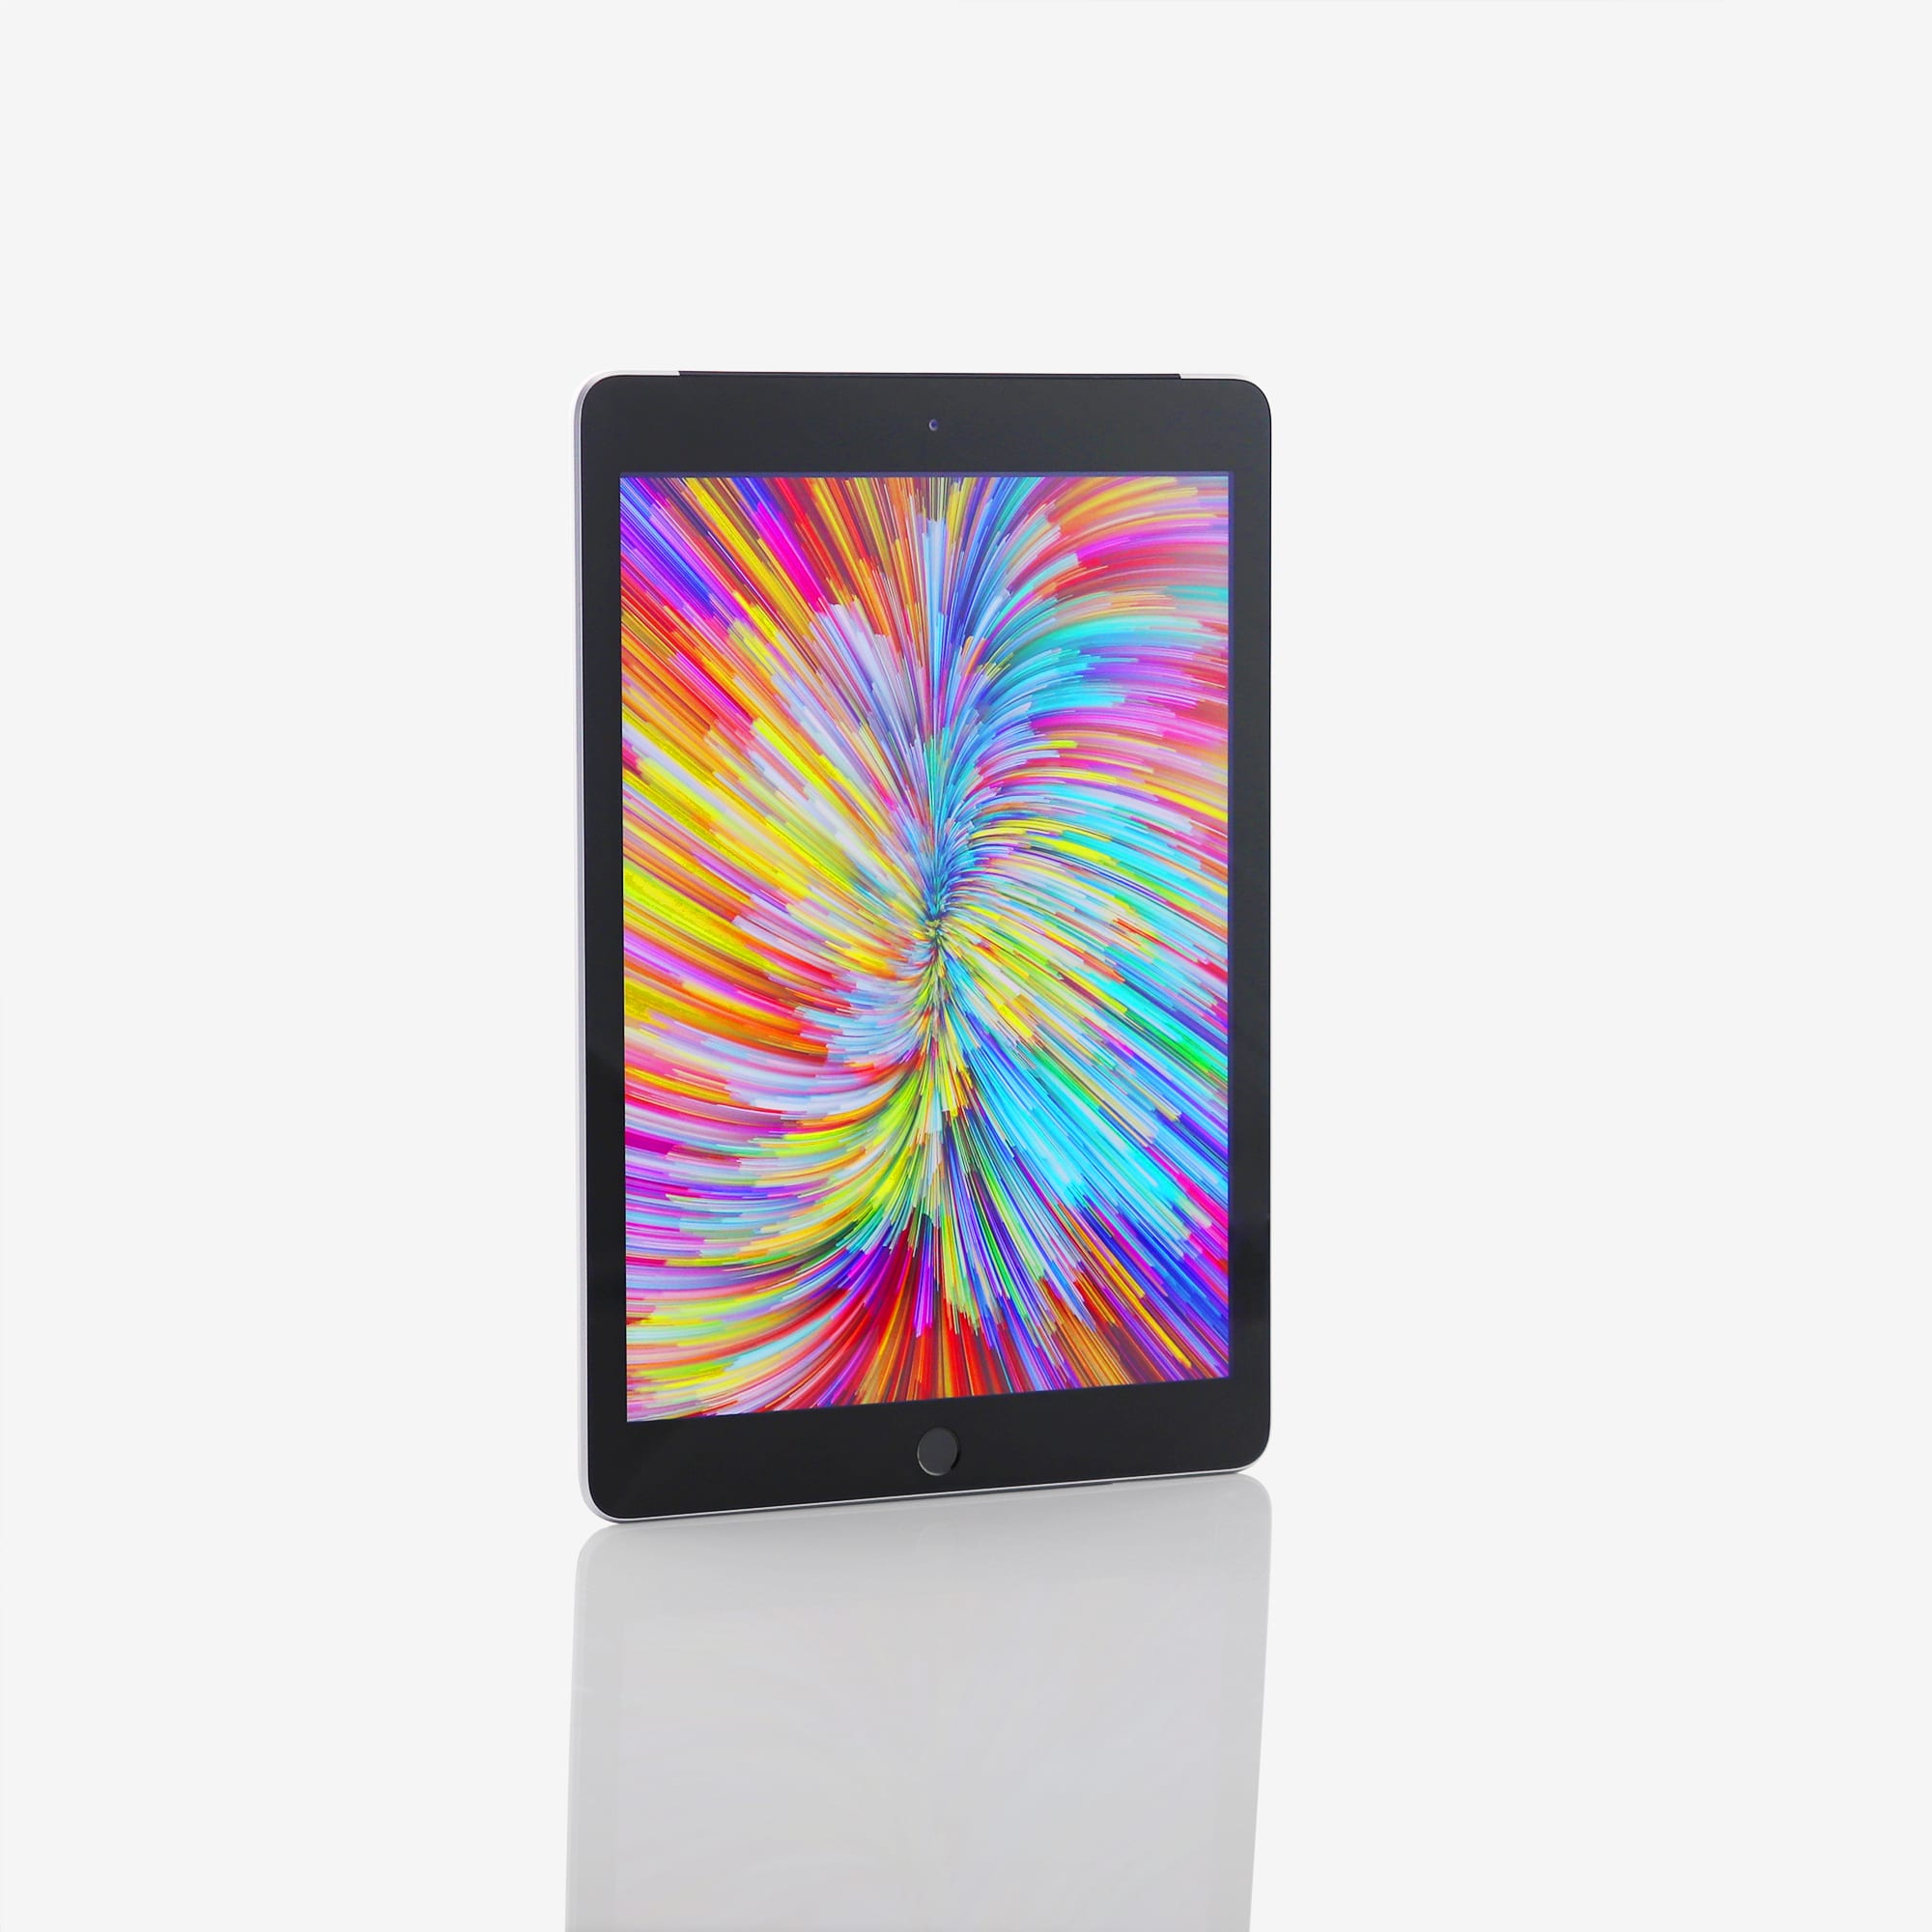 1 x iPad Air (Wi-Fi + Cellular) Space Grey (2013)